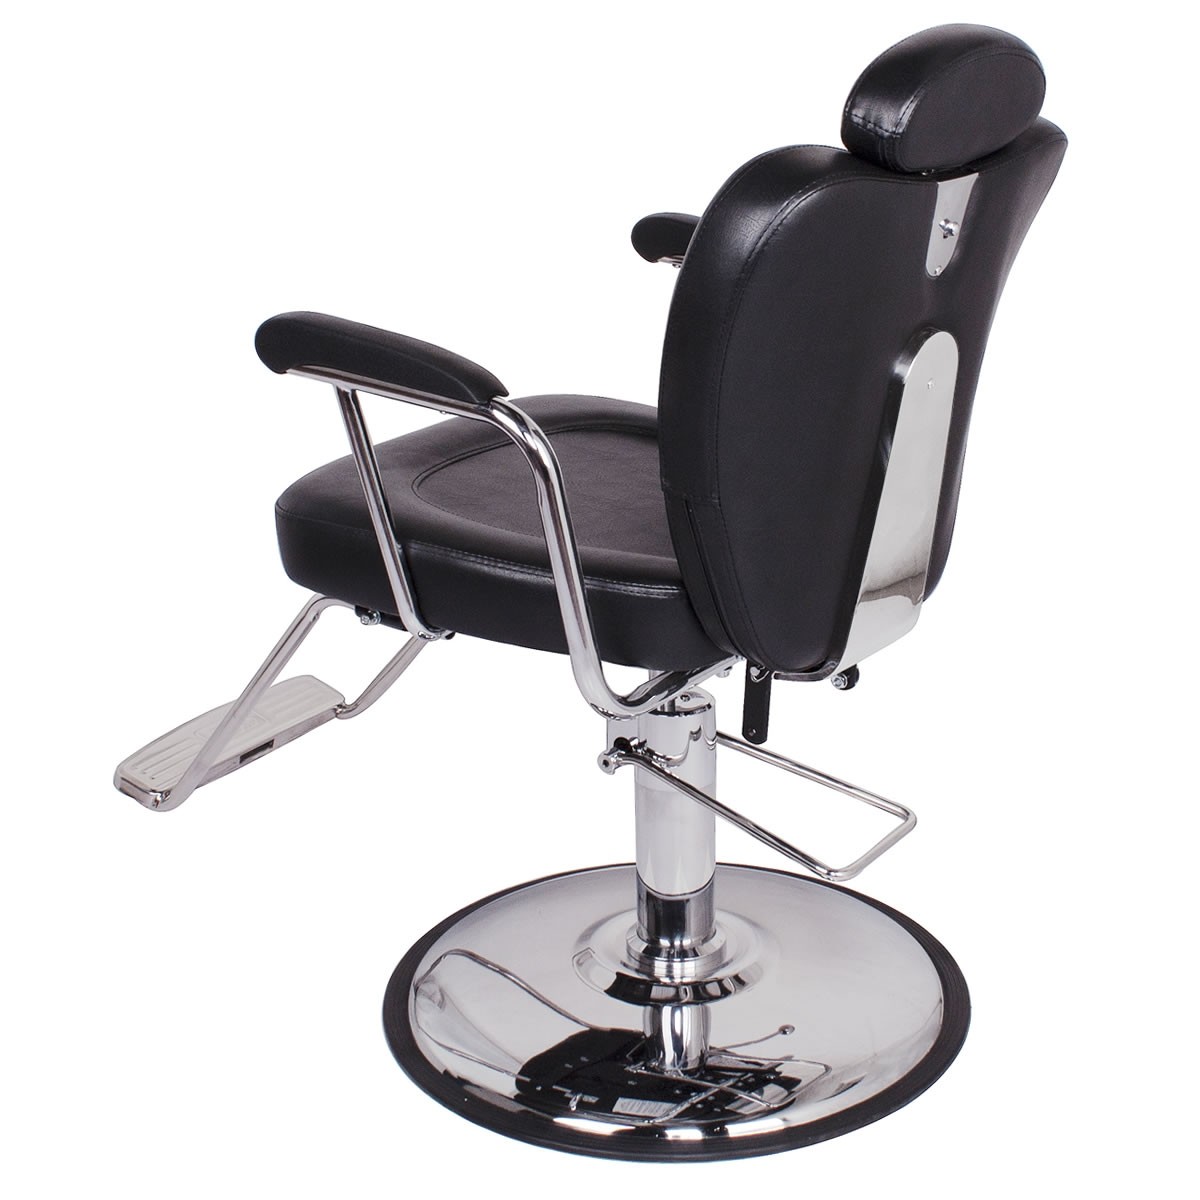 "DALLAS" Reclining All-Purpose Salon Chair, All Purpose Styling Chair